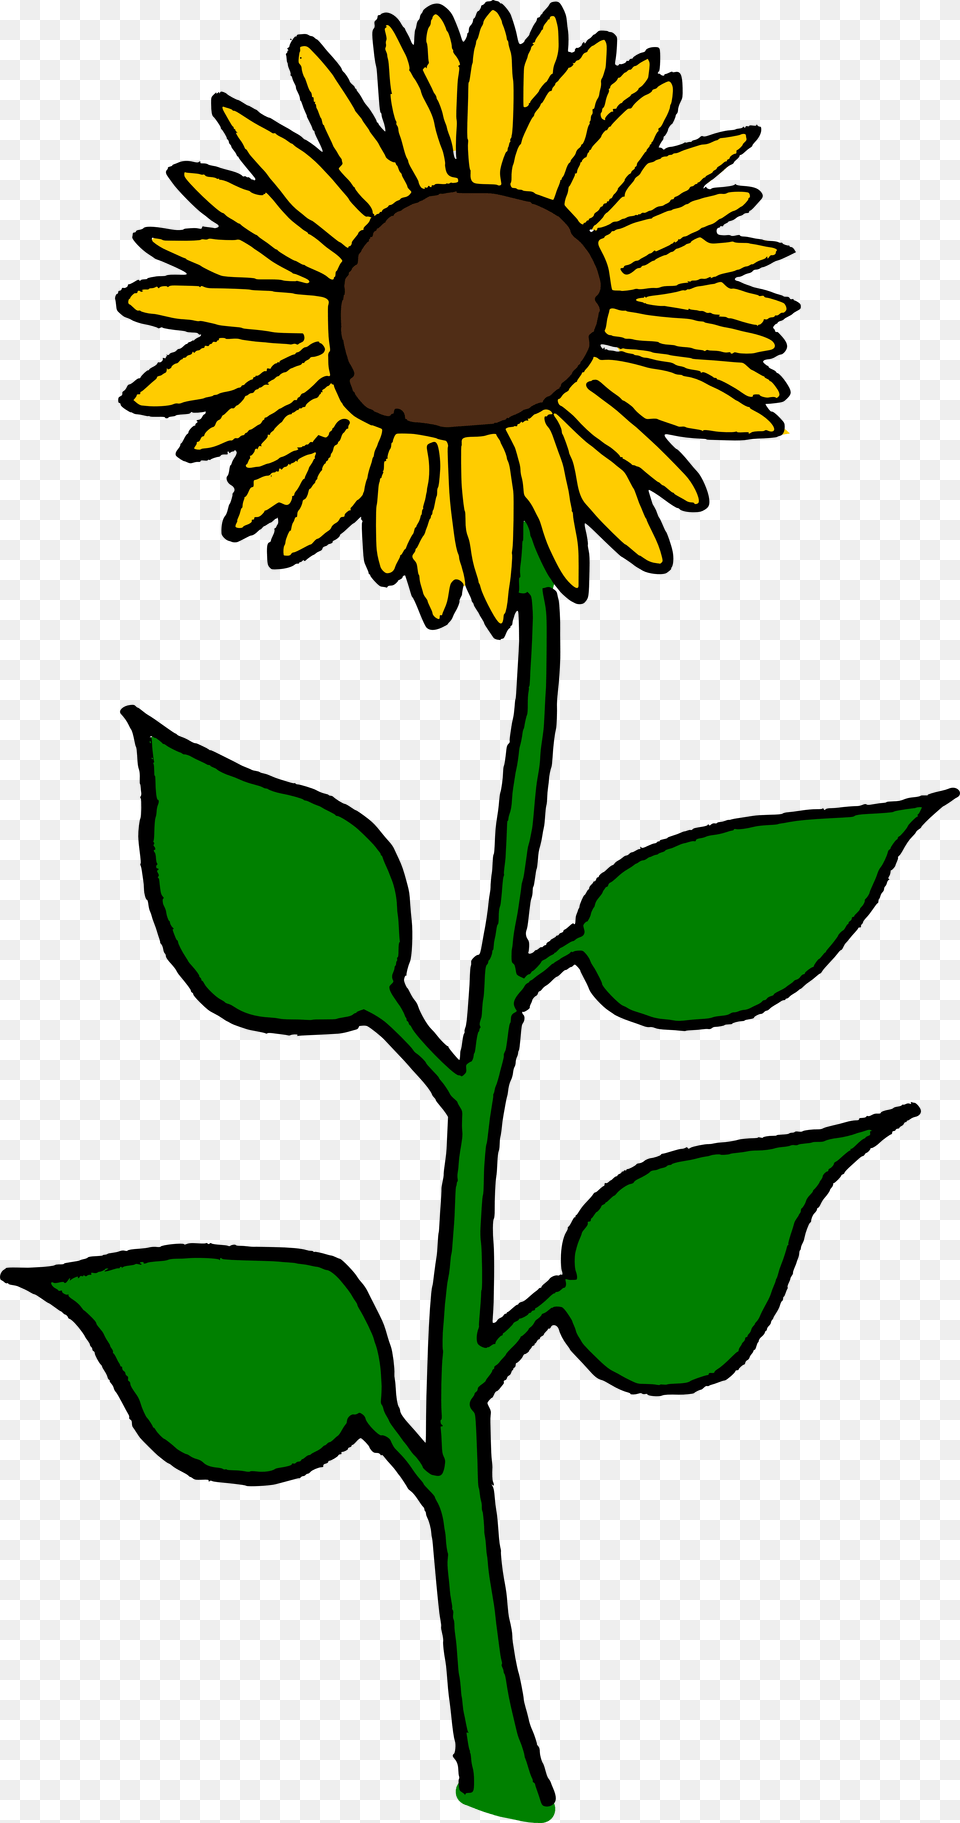 Common Sunflower Sunflower Seed Helianthus Giganteus Sun Flower Clip Art, Plant, Daisy, Leaf Png